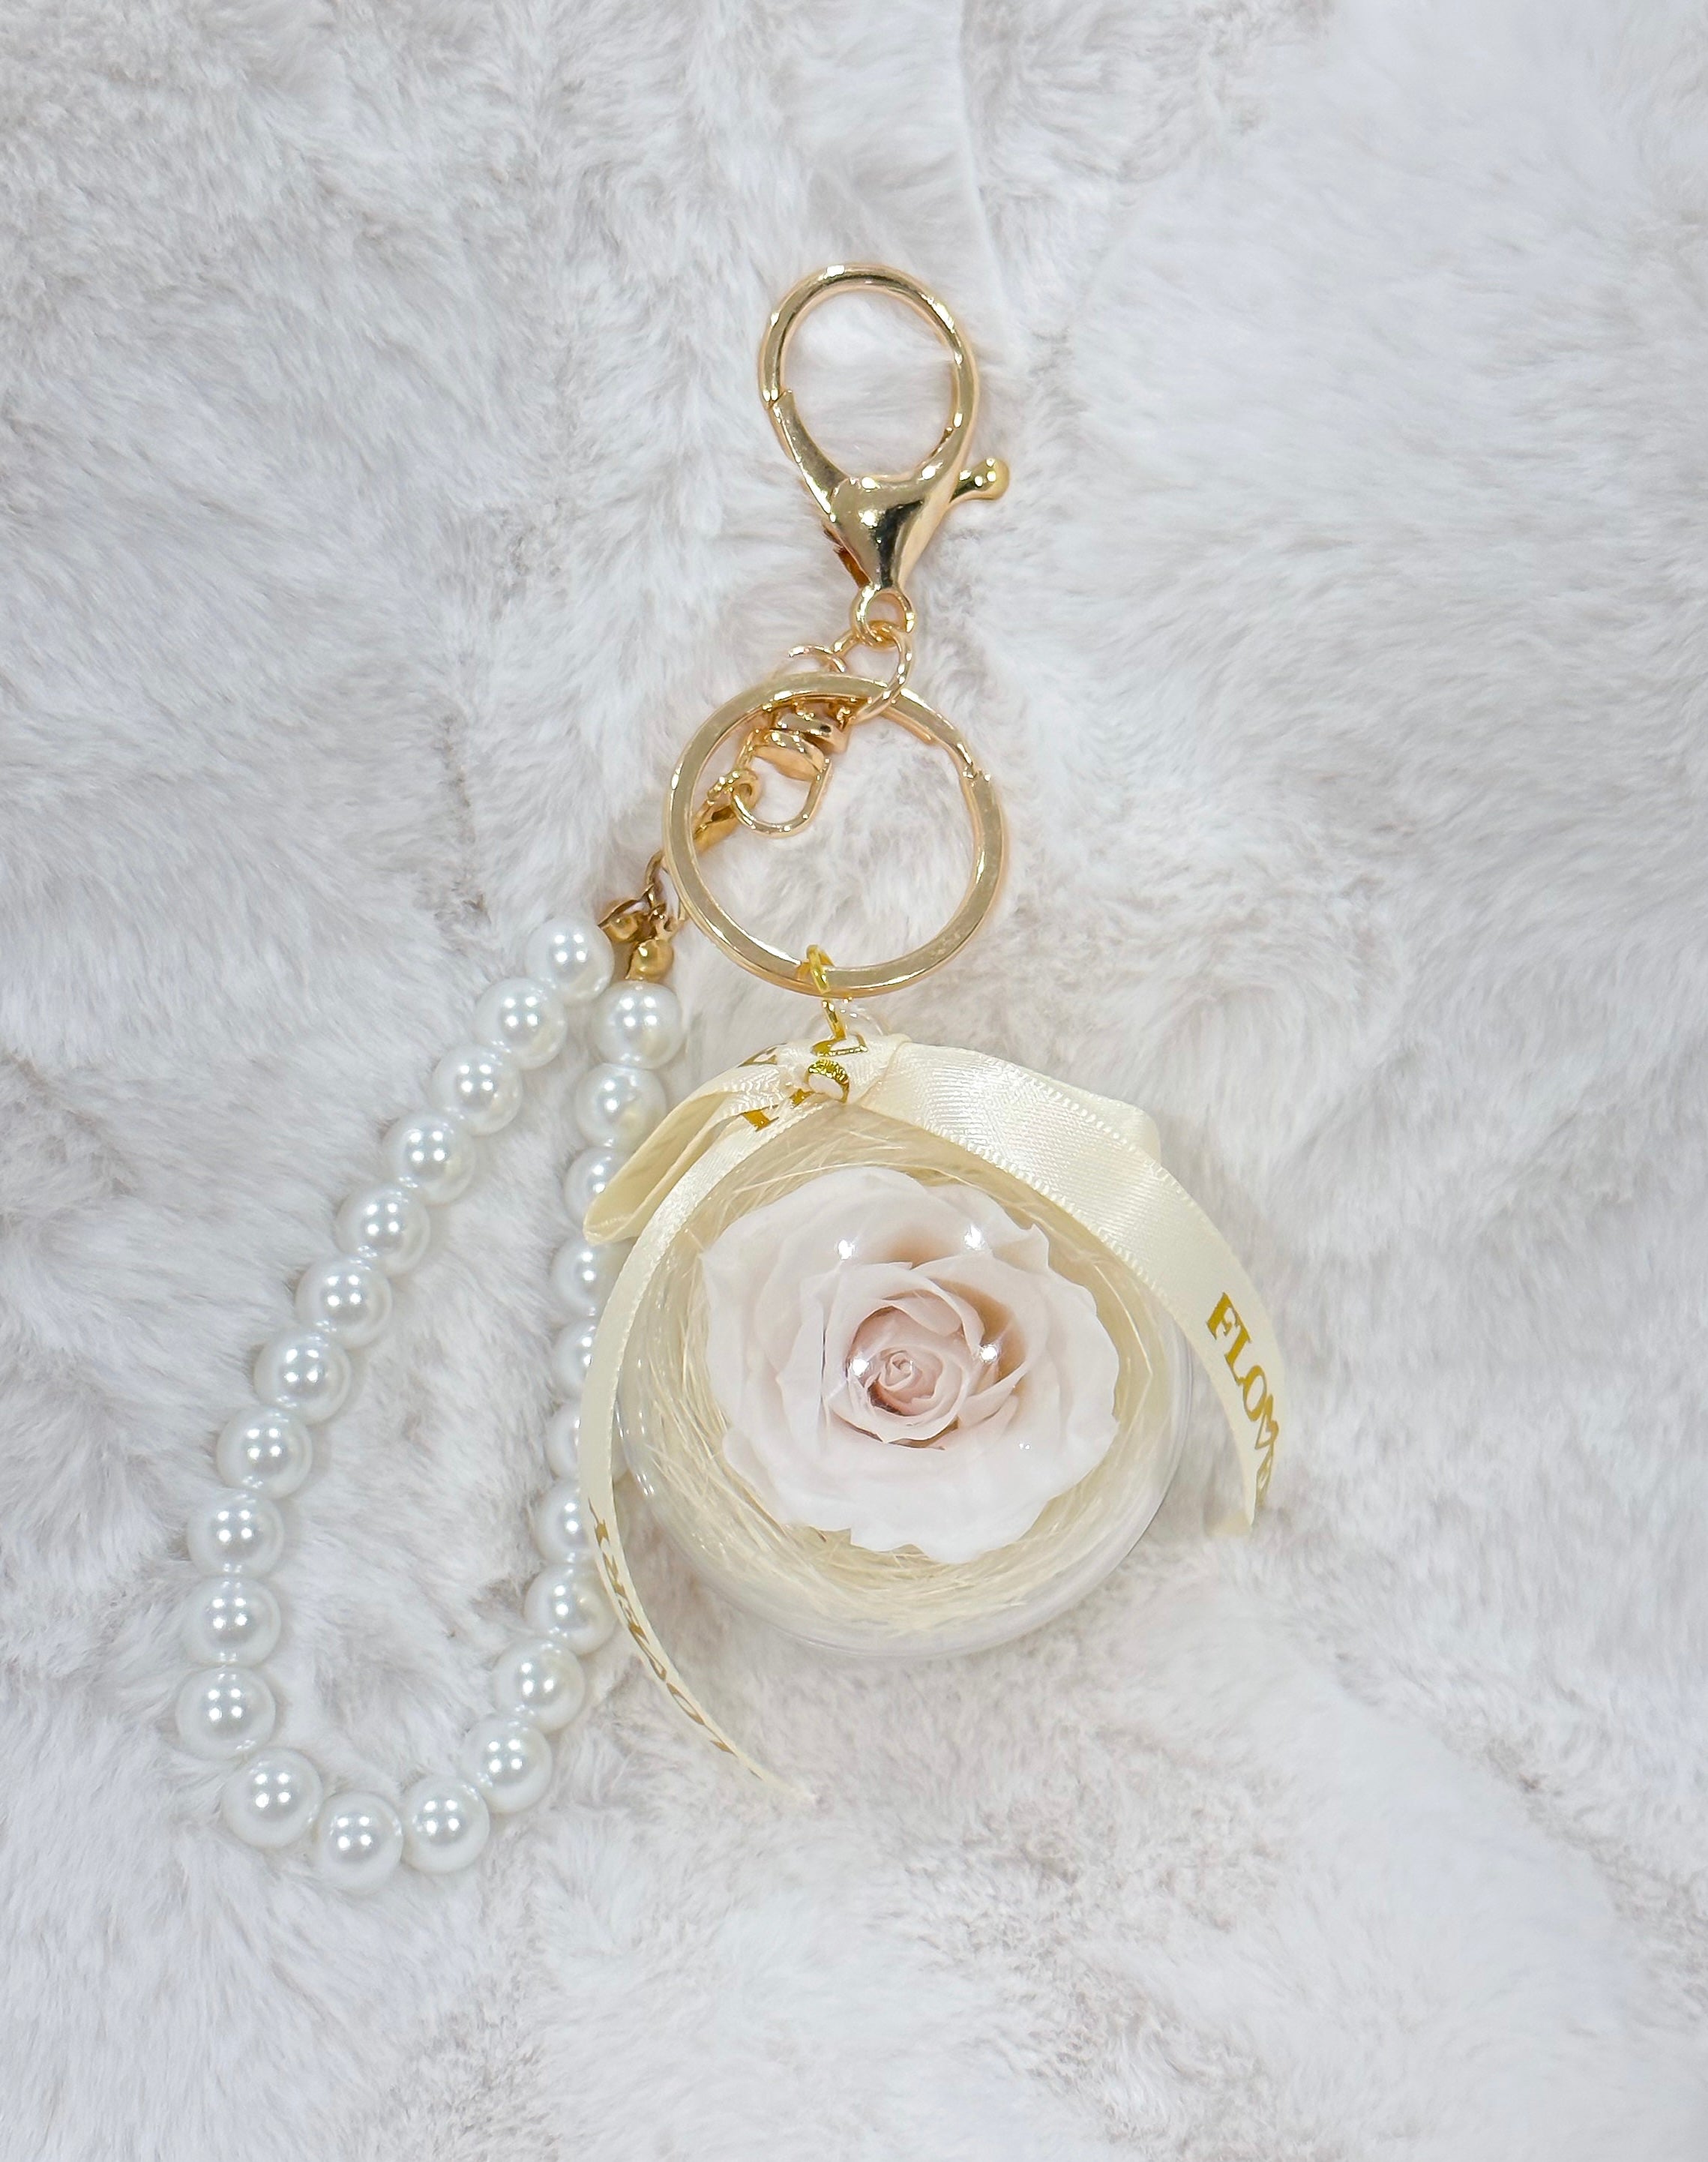 Eternity Preserved Rose Keychain/Bag charm